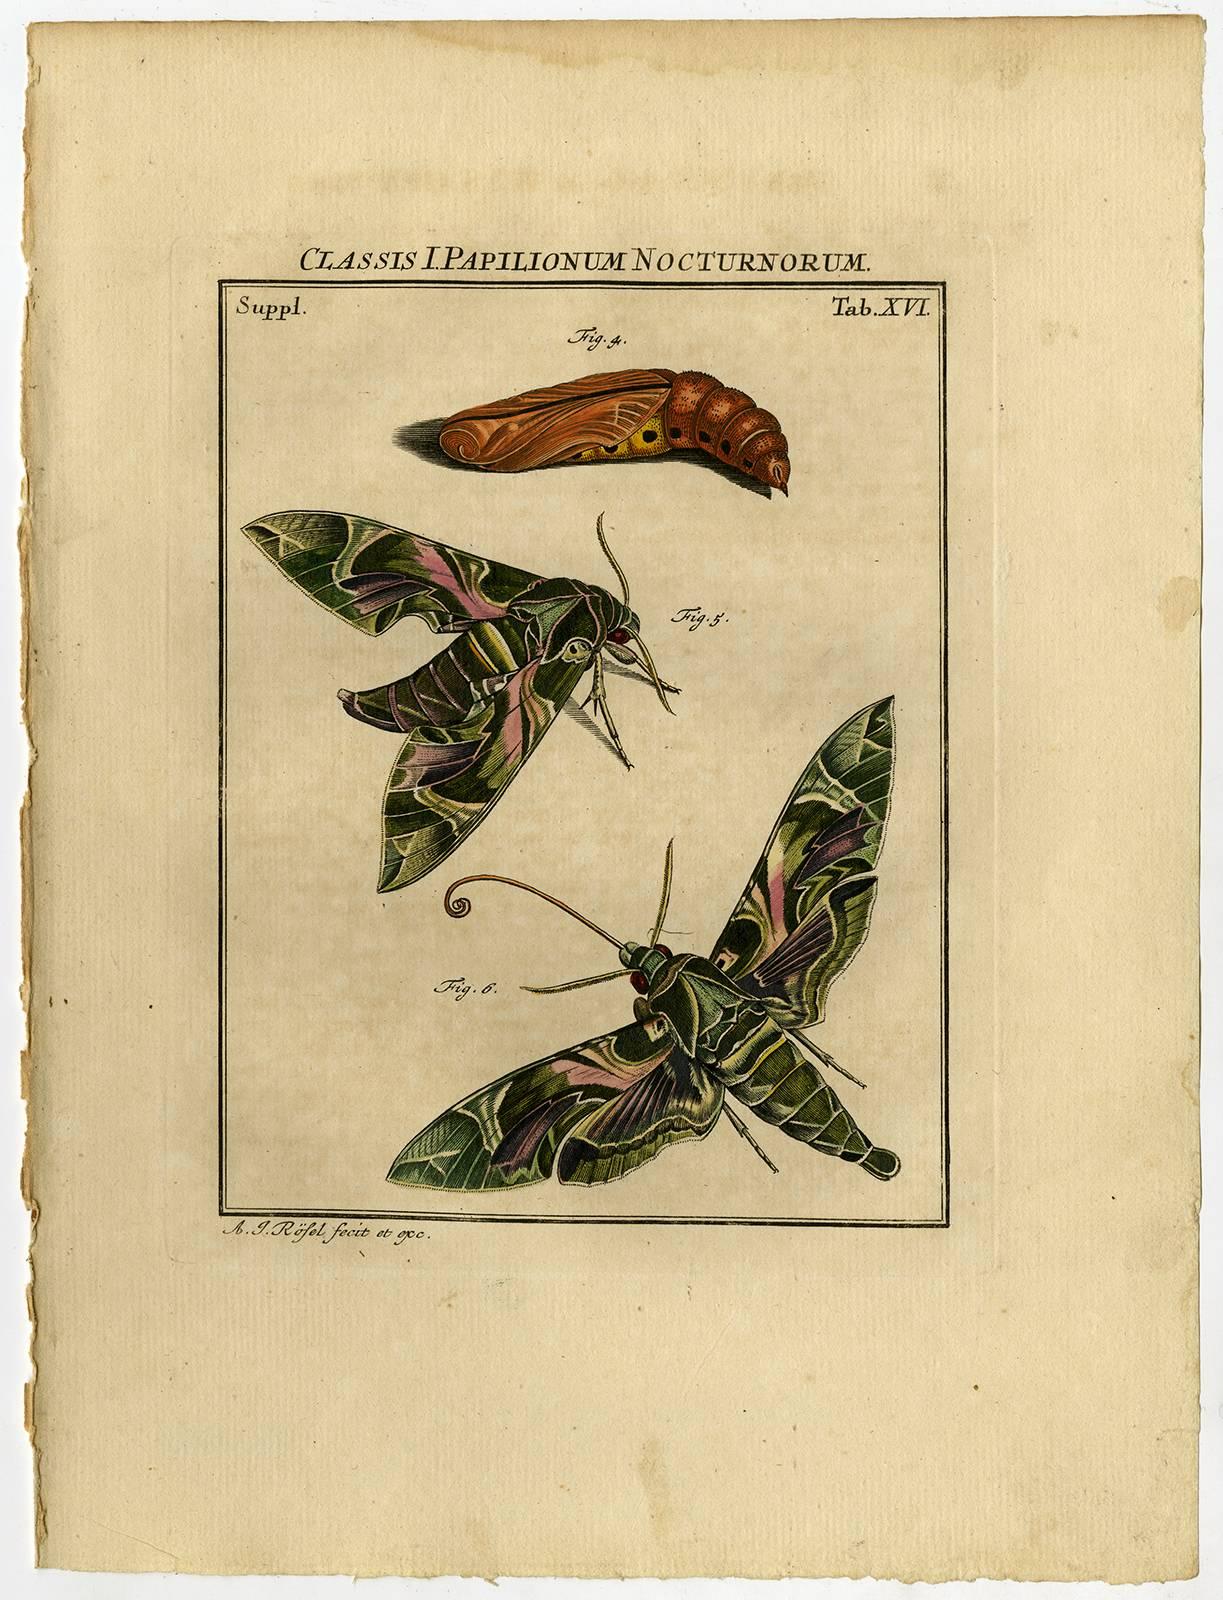 Classis I. Papiliionum Nocturnorum. Tab. XV-XVI. - Print by August Johann Rösel von Rosenhof